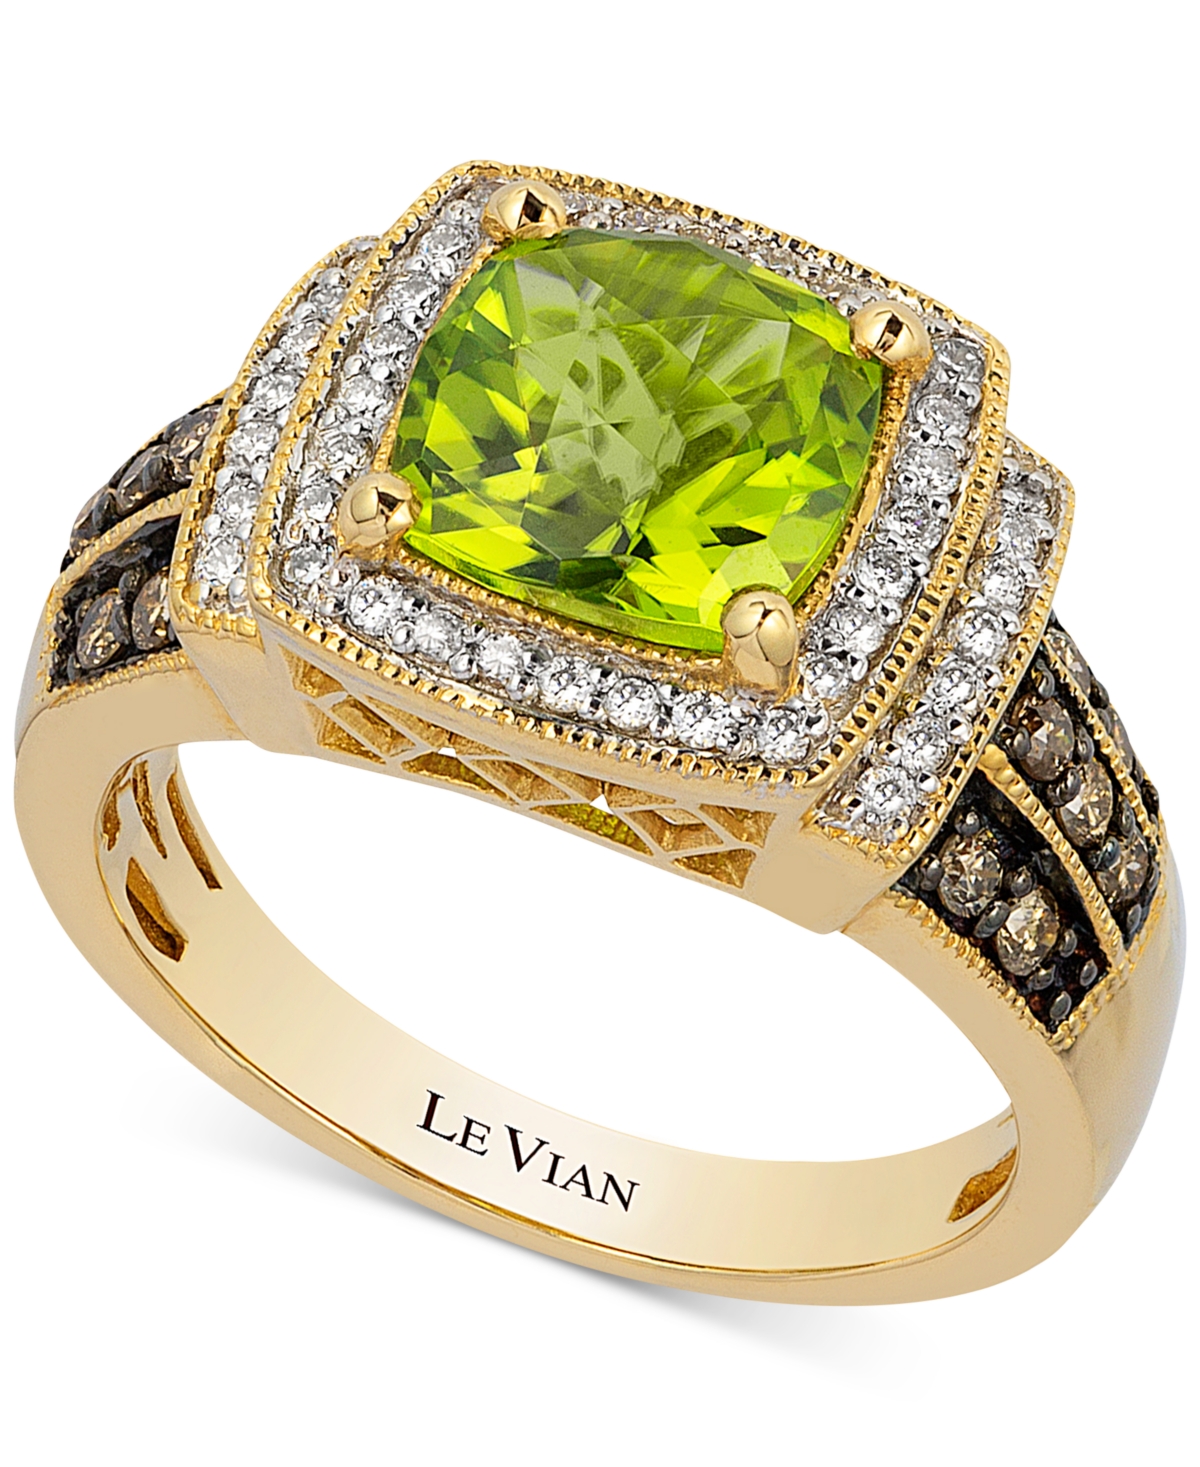 Le Vian Green Apple Peridot (2-1/4 ct. t.w.), Chocolate Diamonds (1/4 ct. t.w.) & Vanilla Diamonds (1/5 ct. t.w.) Ring in 14k Yellow Gold